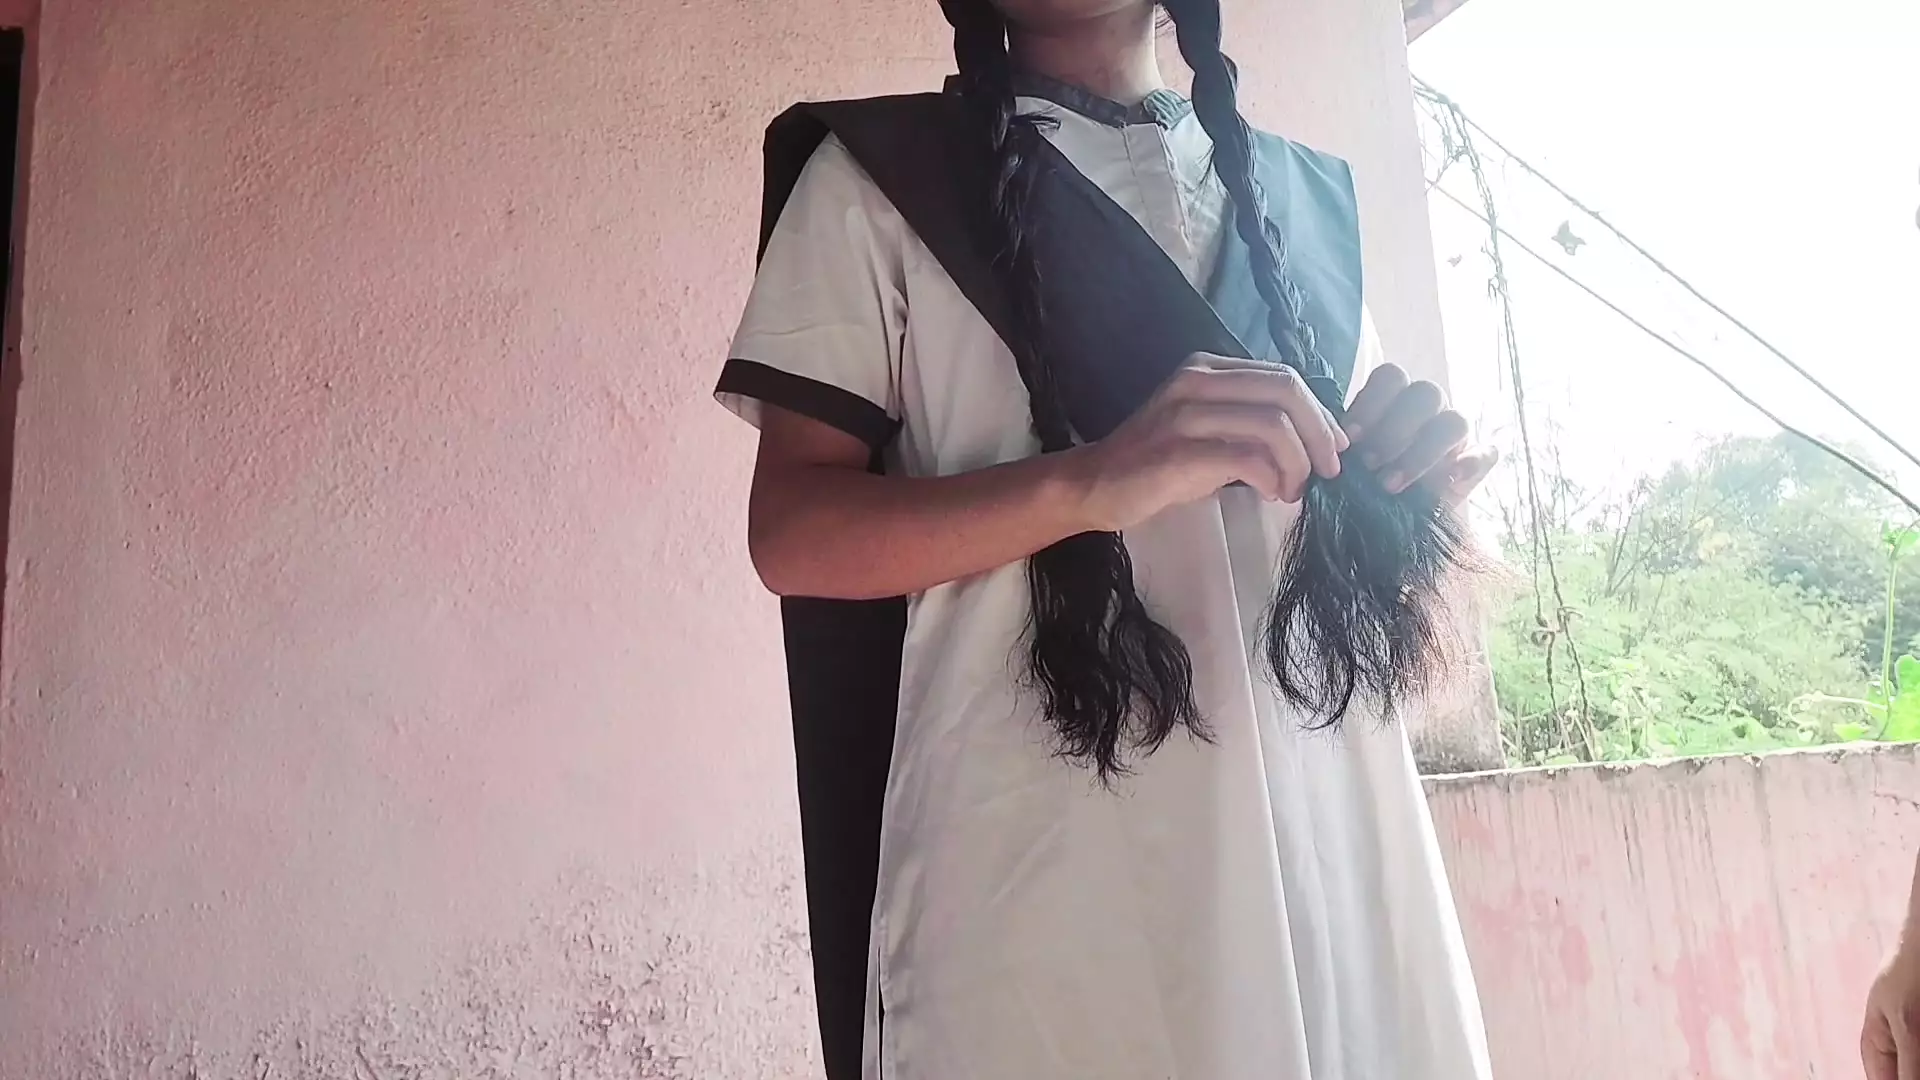 College Ki Chudaei Video Download - Indian college girl sex video watch online